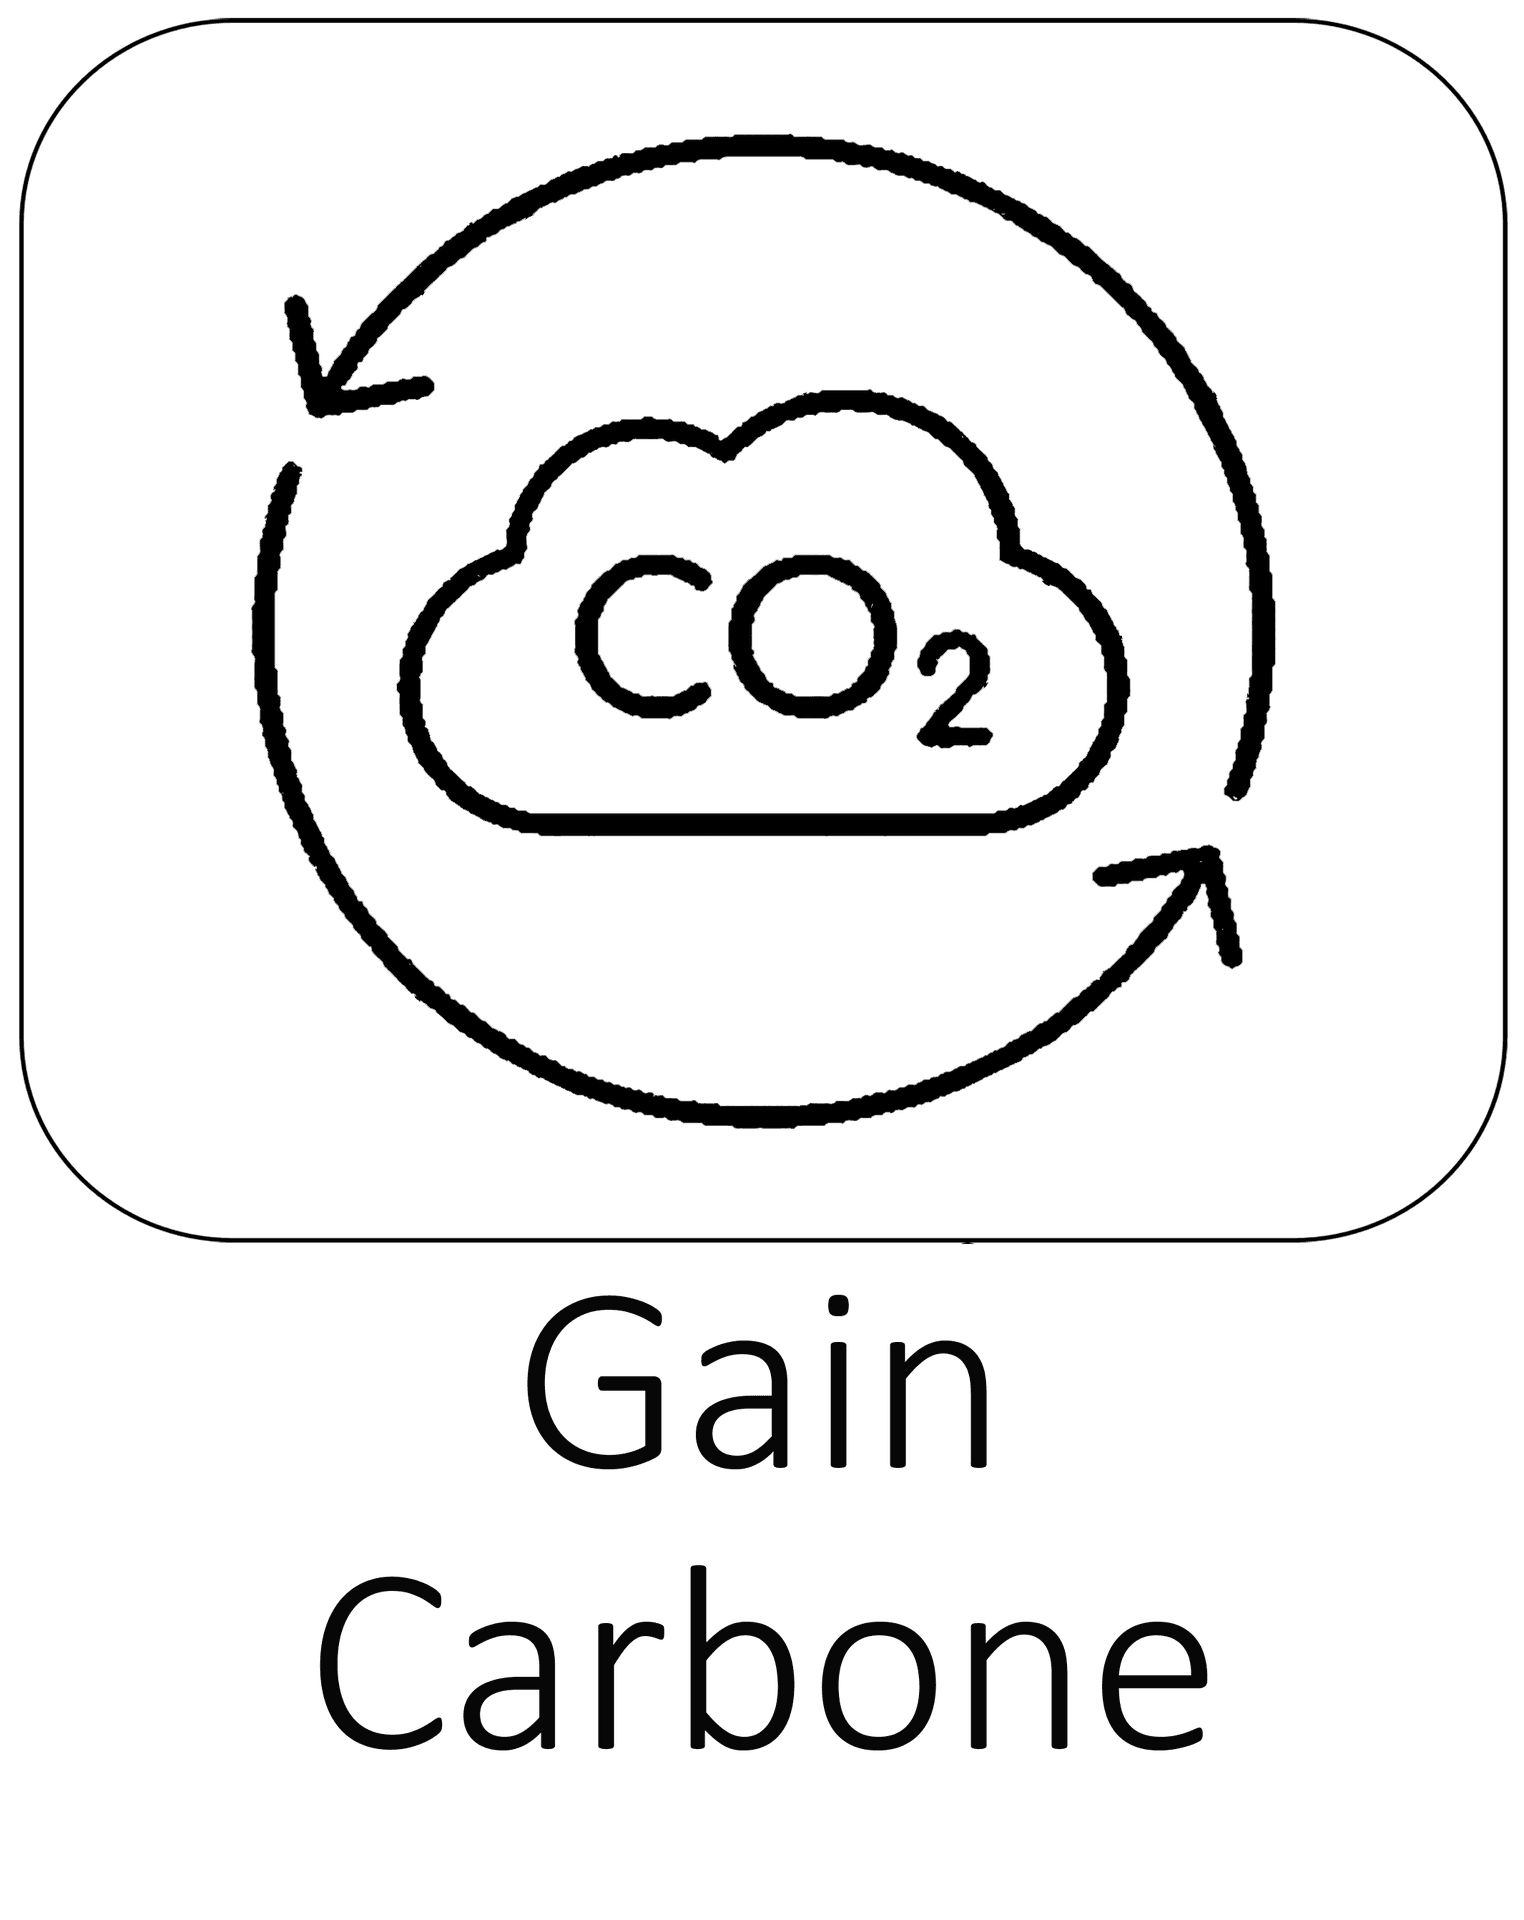 Gain carbone